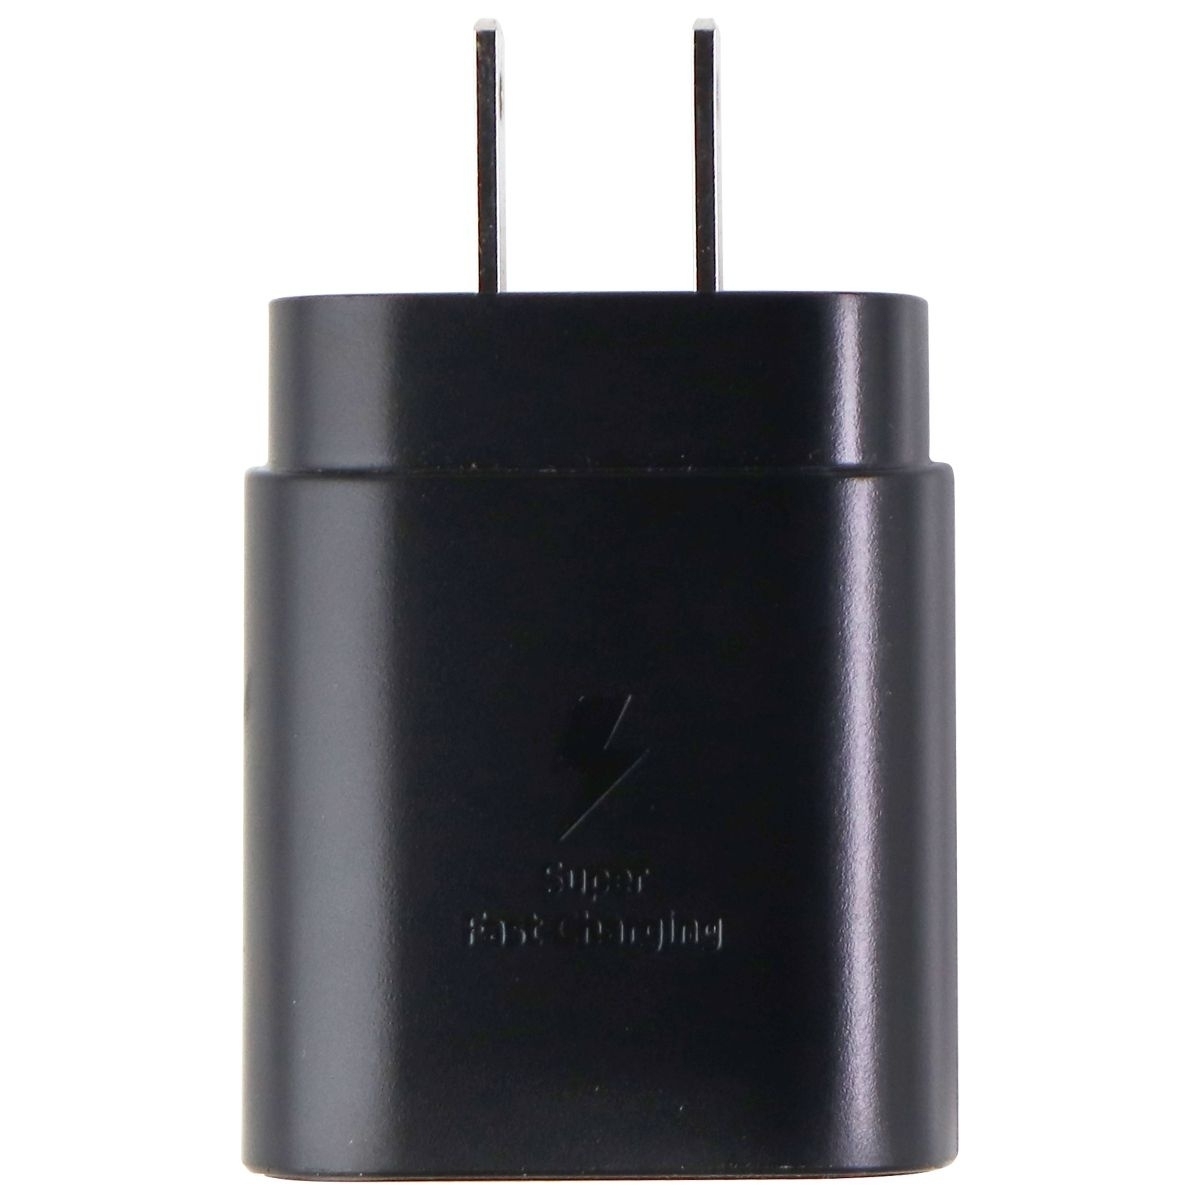 Samsung 25W USB-C Super Fast Charging Wall Charger - Black (EP-TA800NBEGUS)